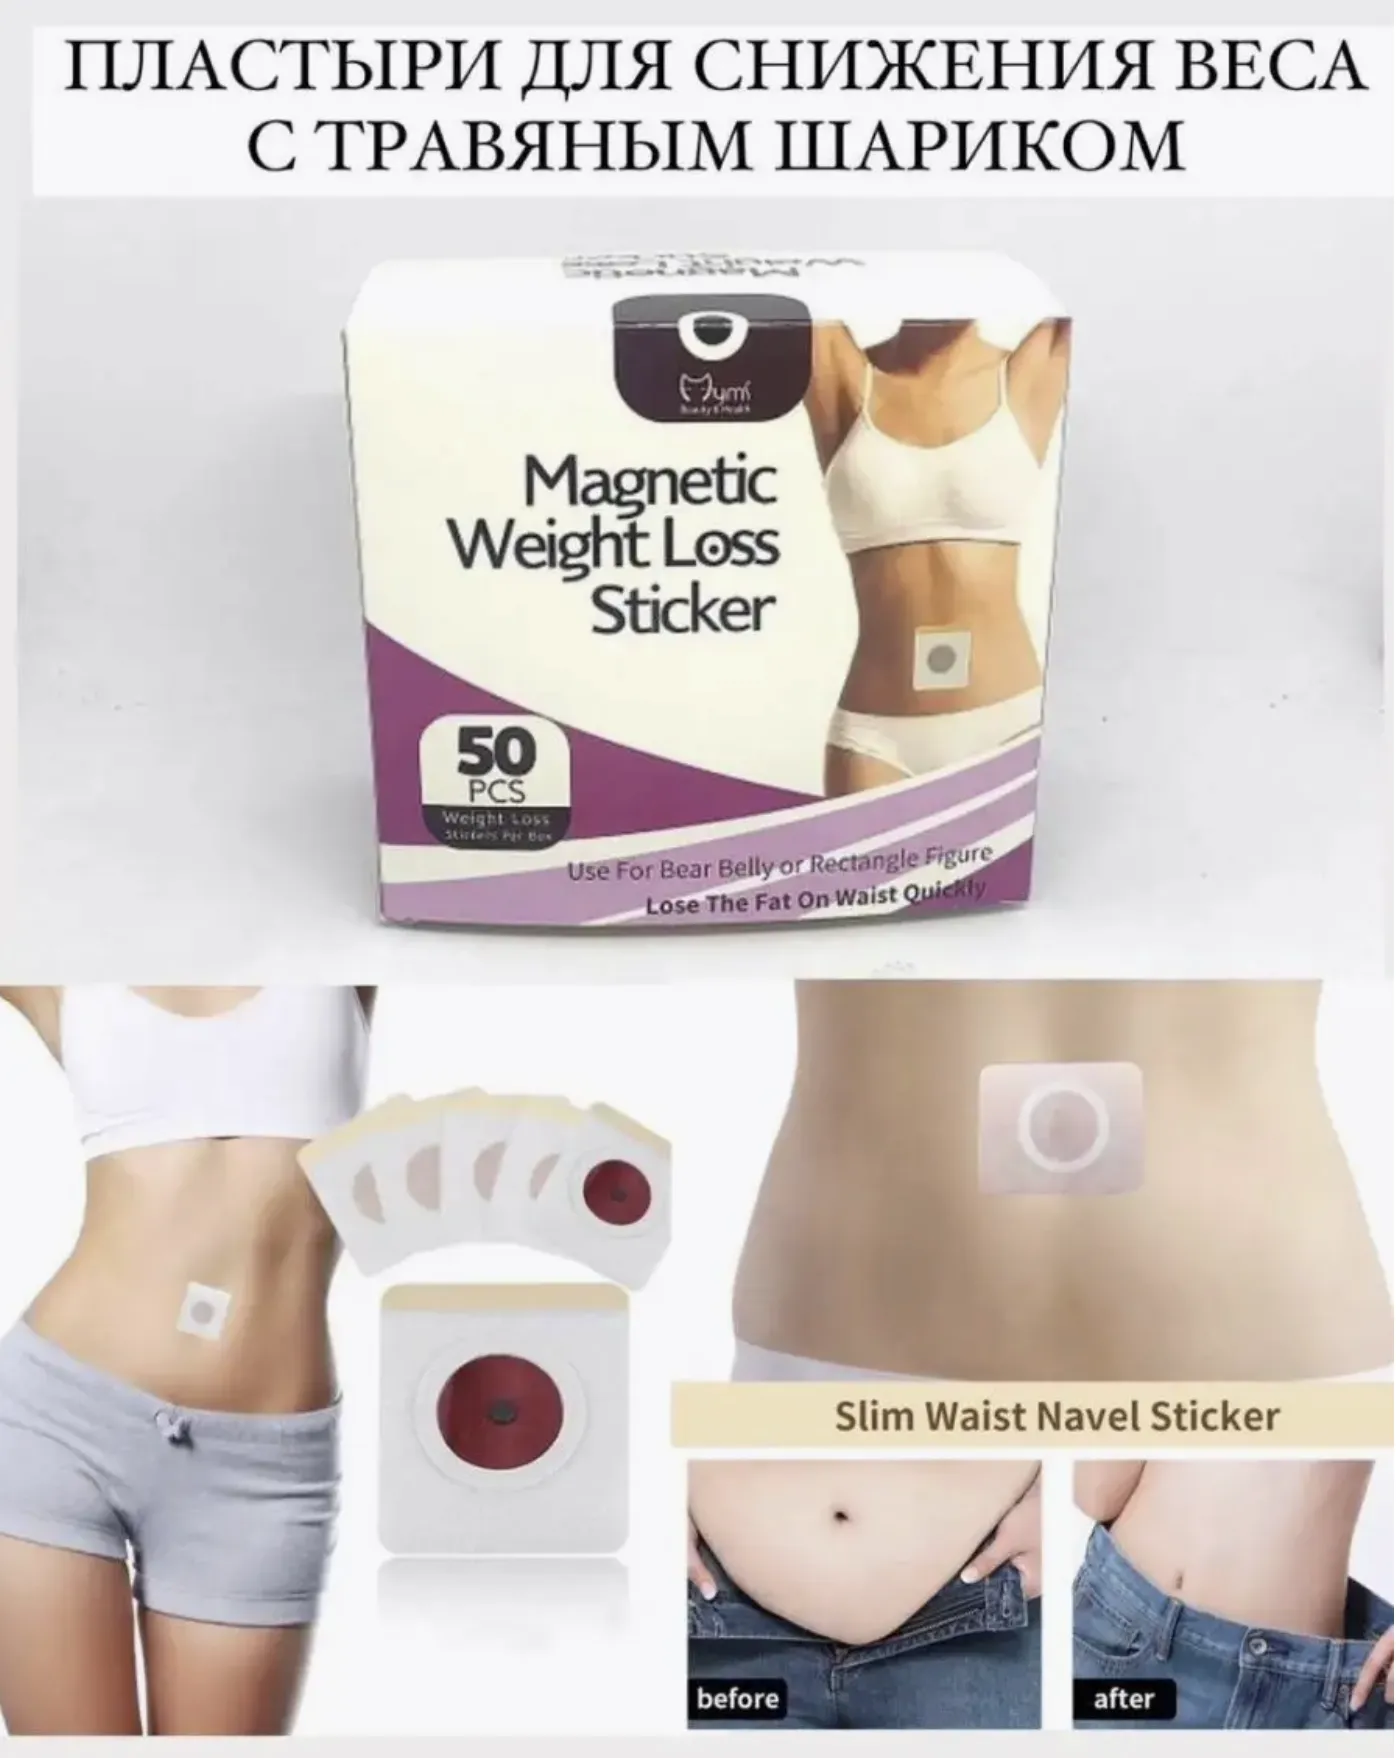 Пластырь Для Похудения Magnetic Weight Loss Sticker#1